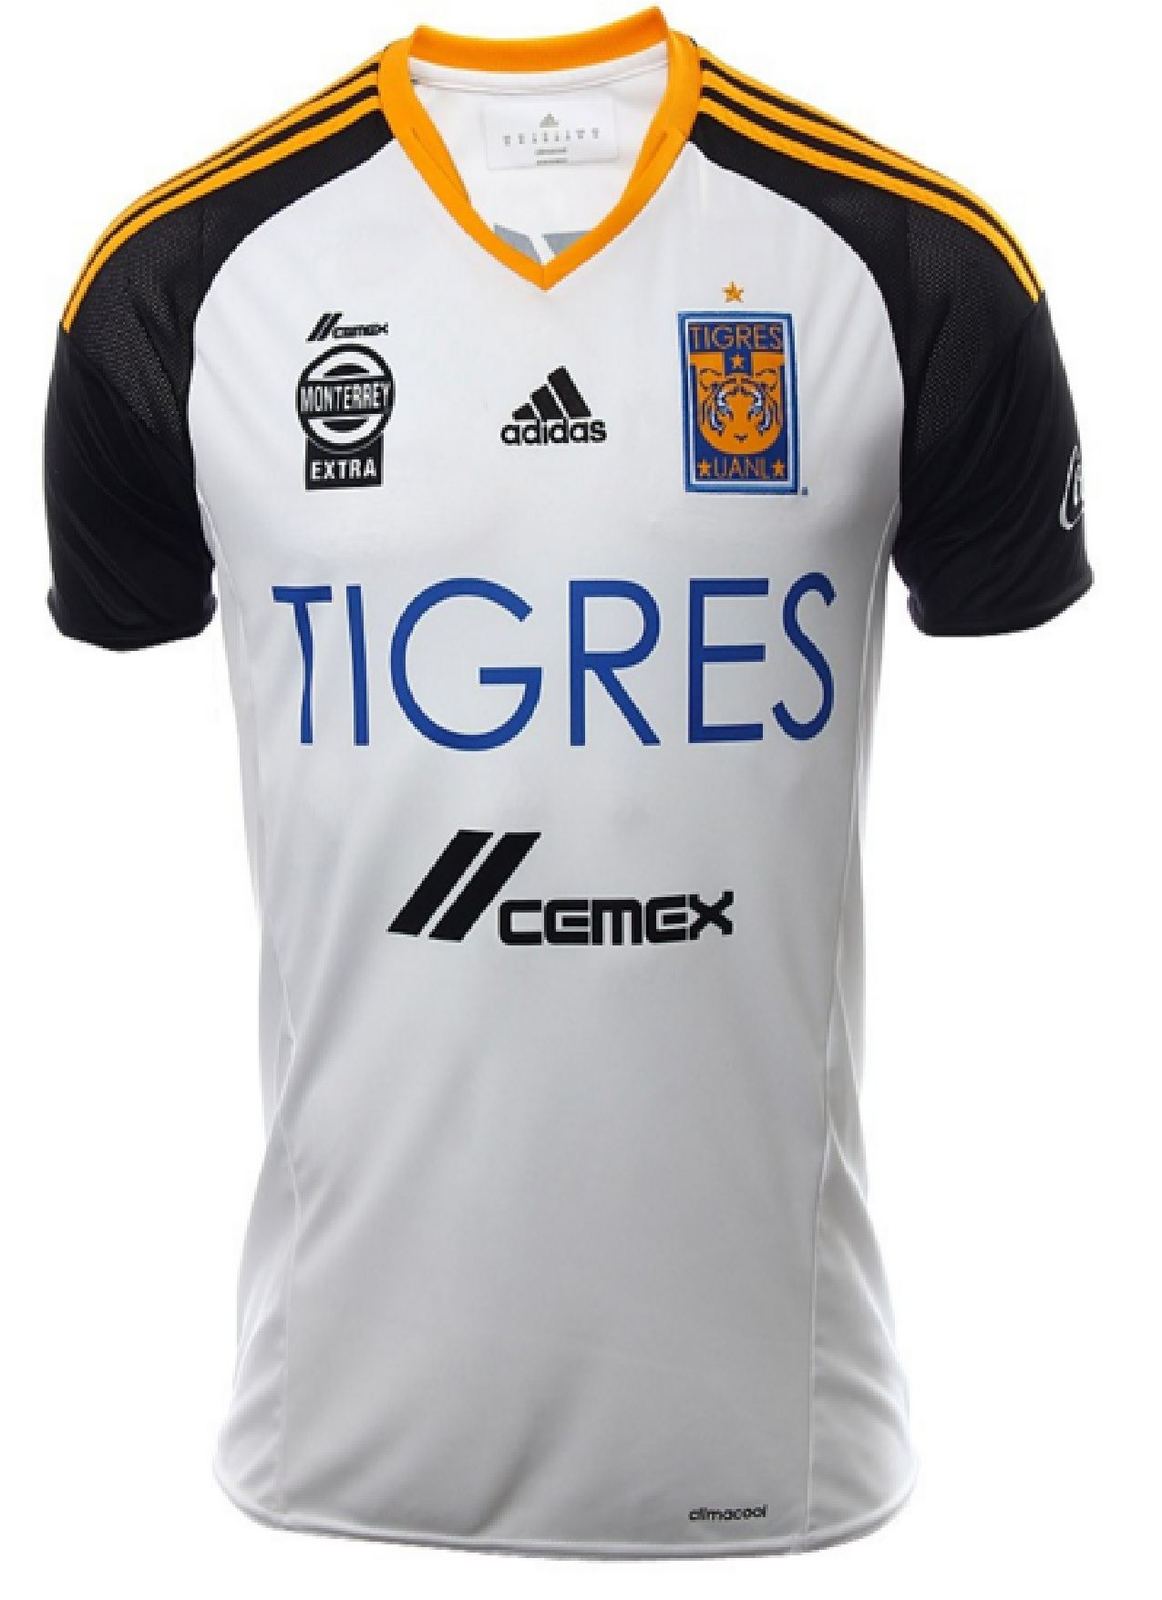 Tigres 2016/17 Third Soccer Jersey